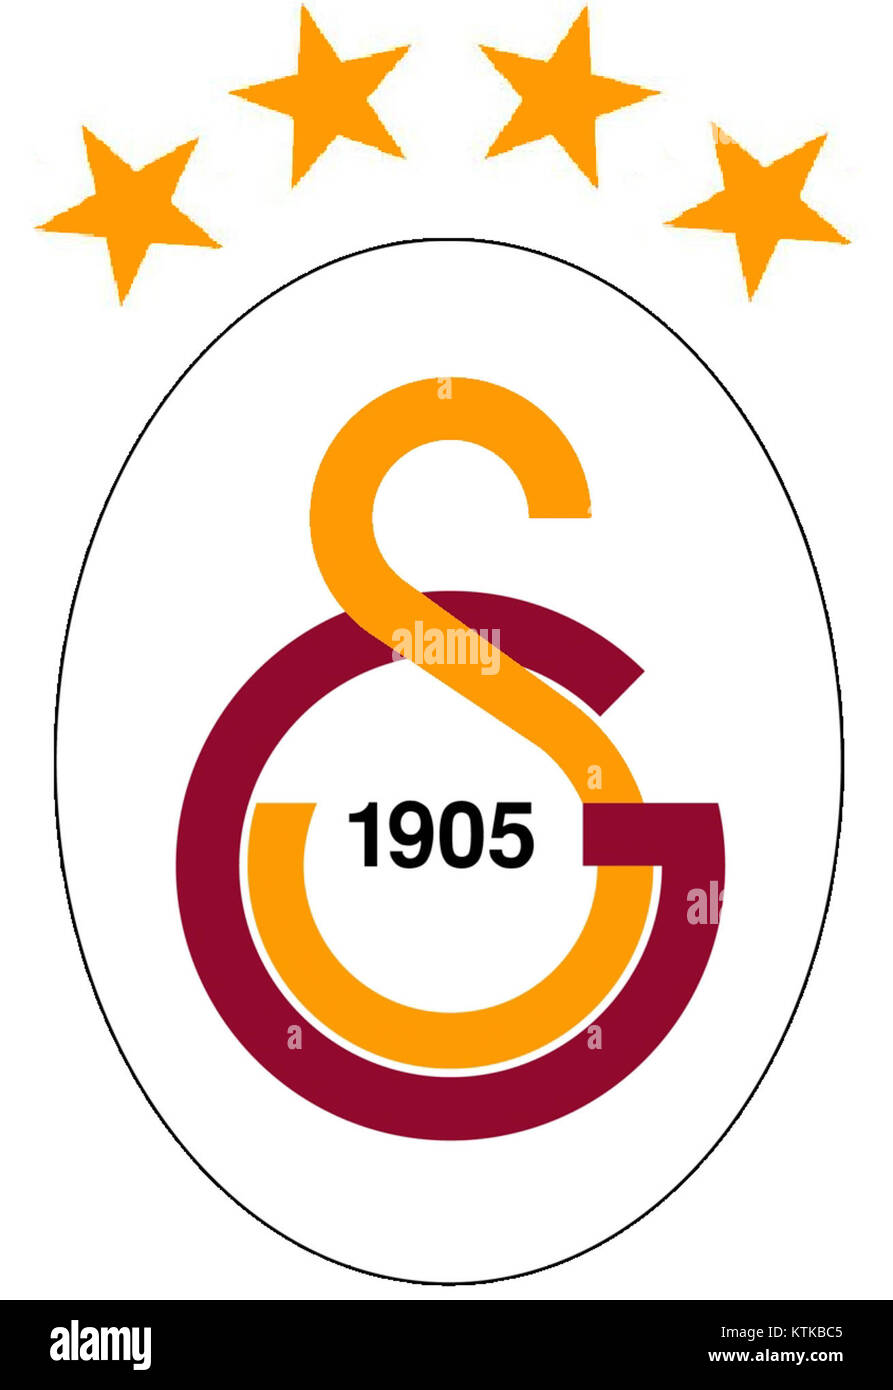 Galatasaray Four Star Logo Stock Photo